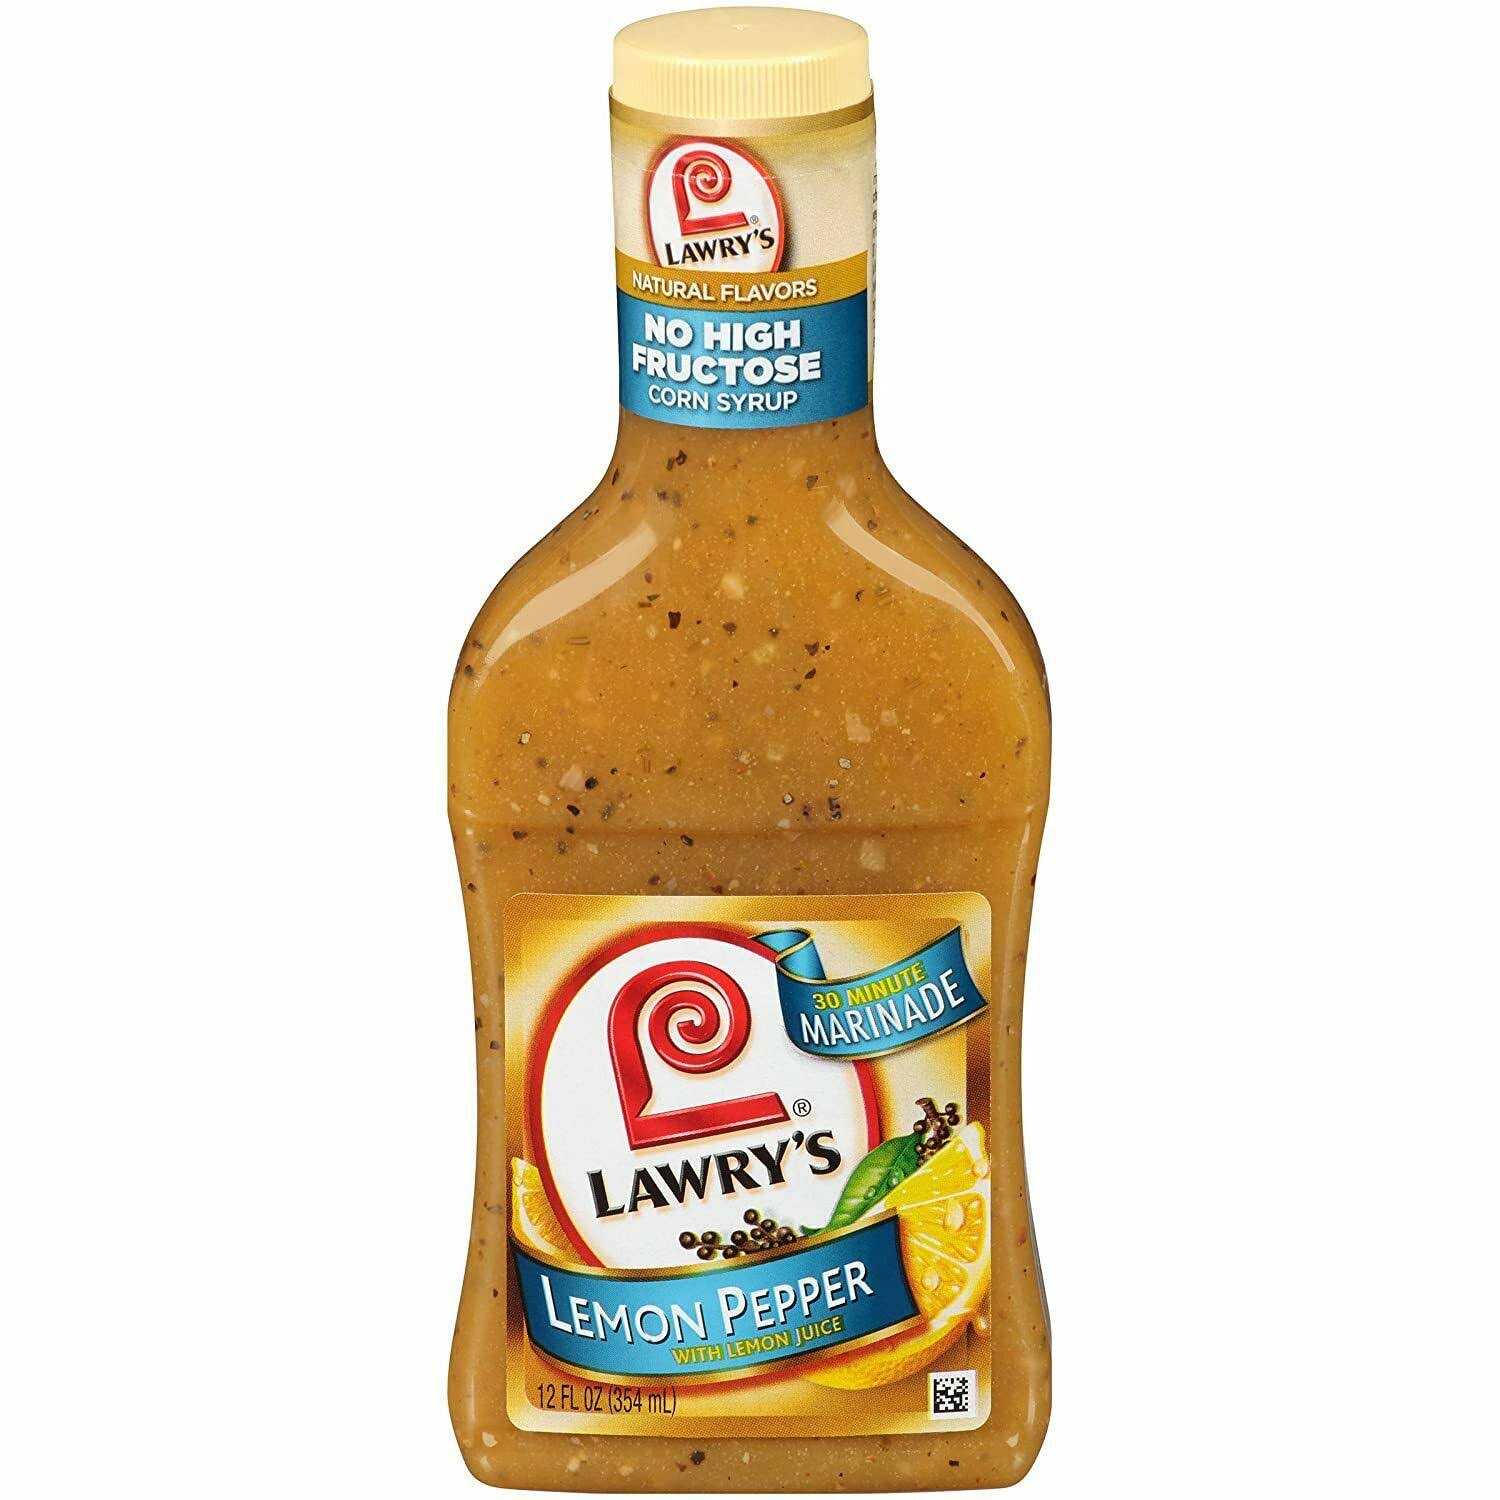 Lawry's Lemon Pepper With Lemon Marinade - 12 oz